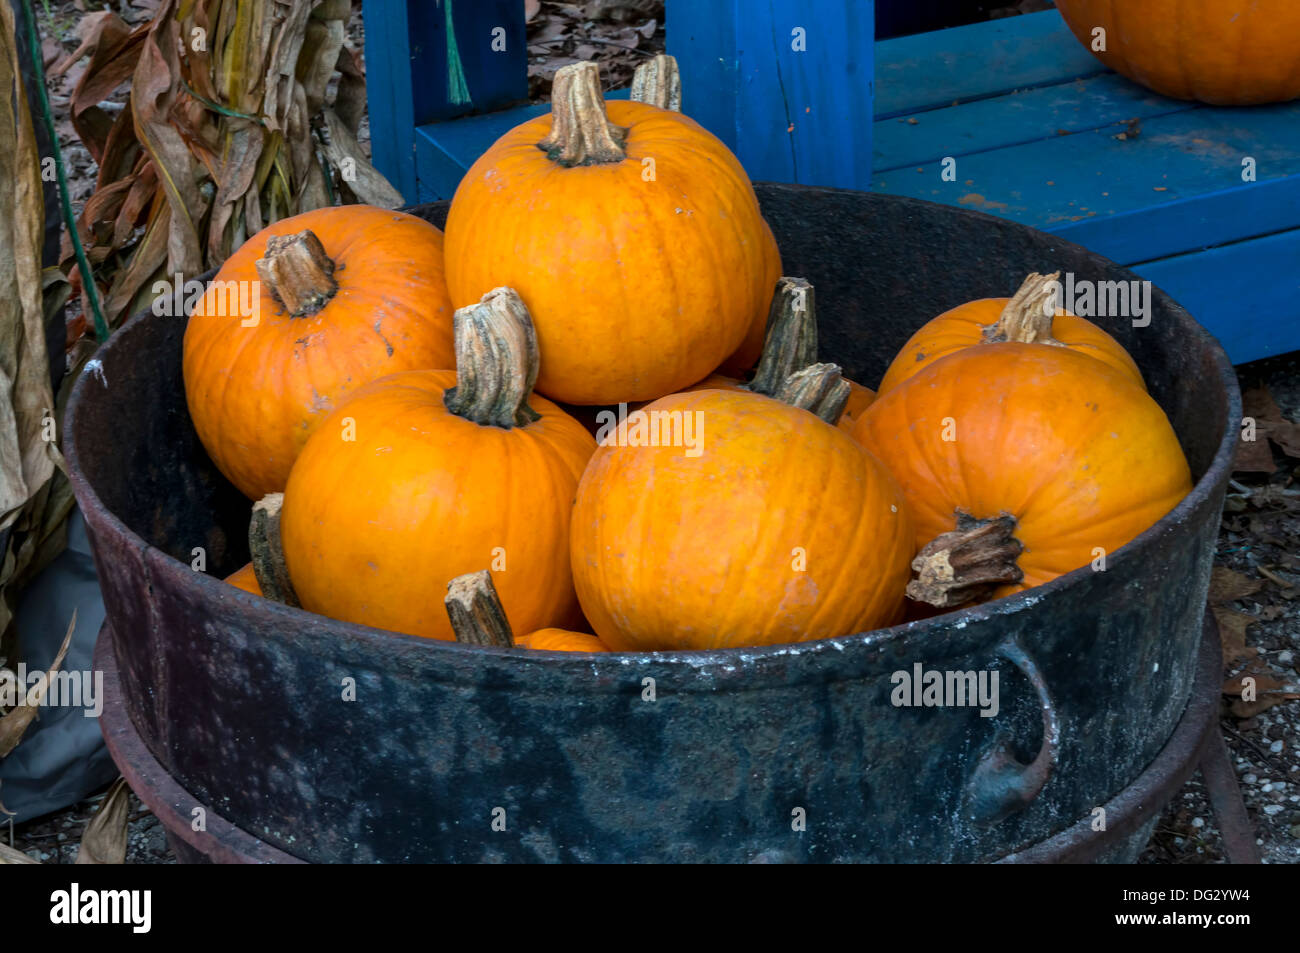 Orange Halloween and Thanksgiving pumpkins [Cucurbita pepo] displayed for sale in a metal barrel. Stock Photo